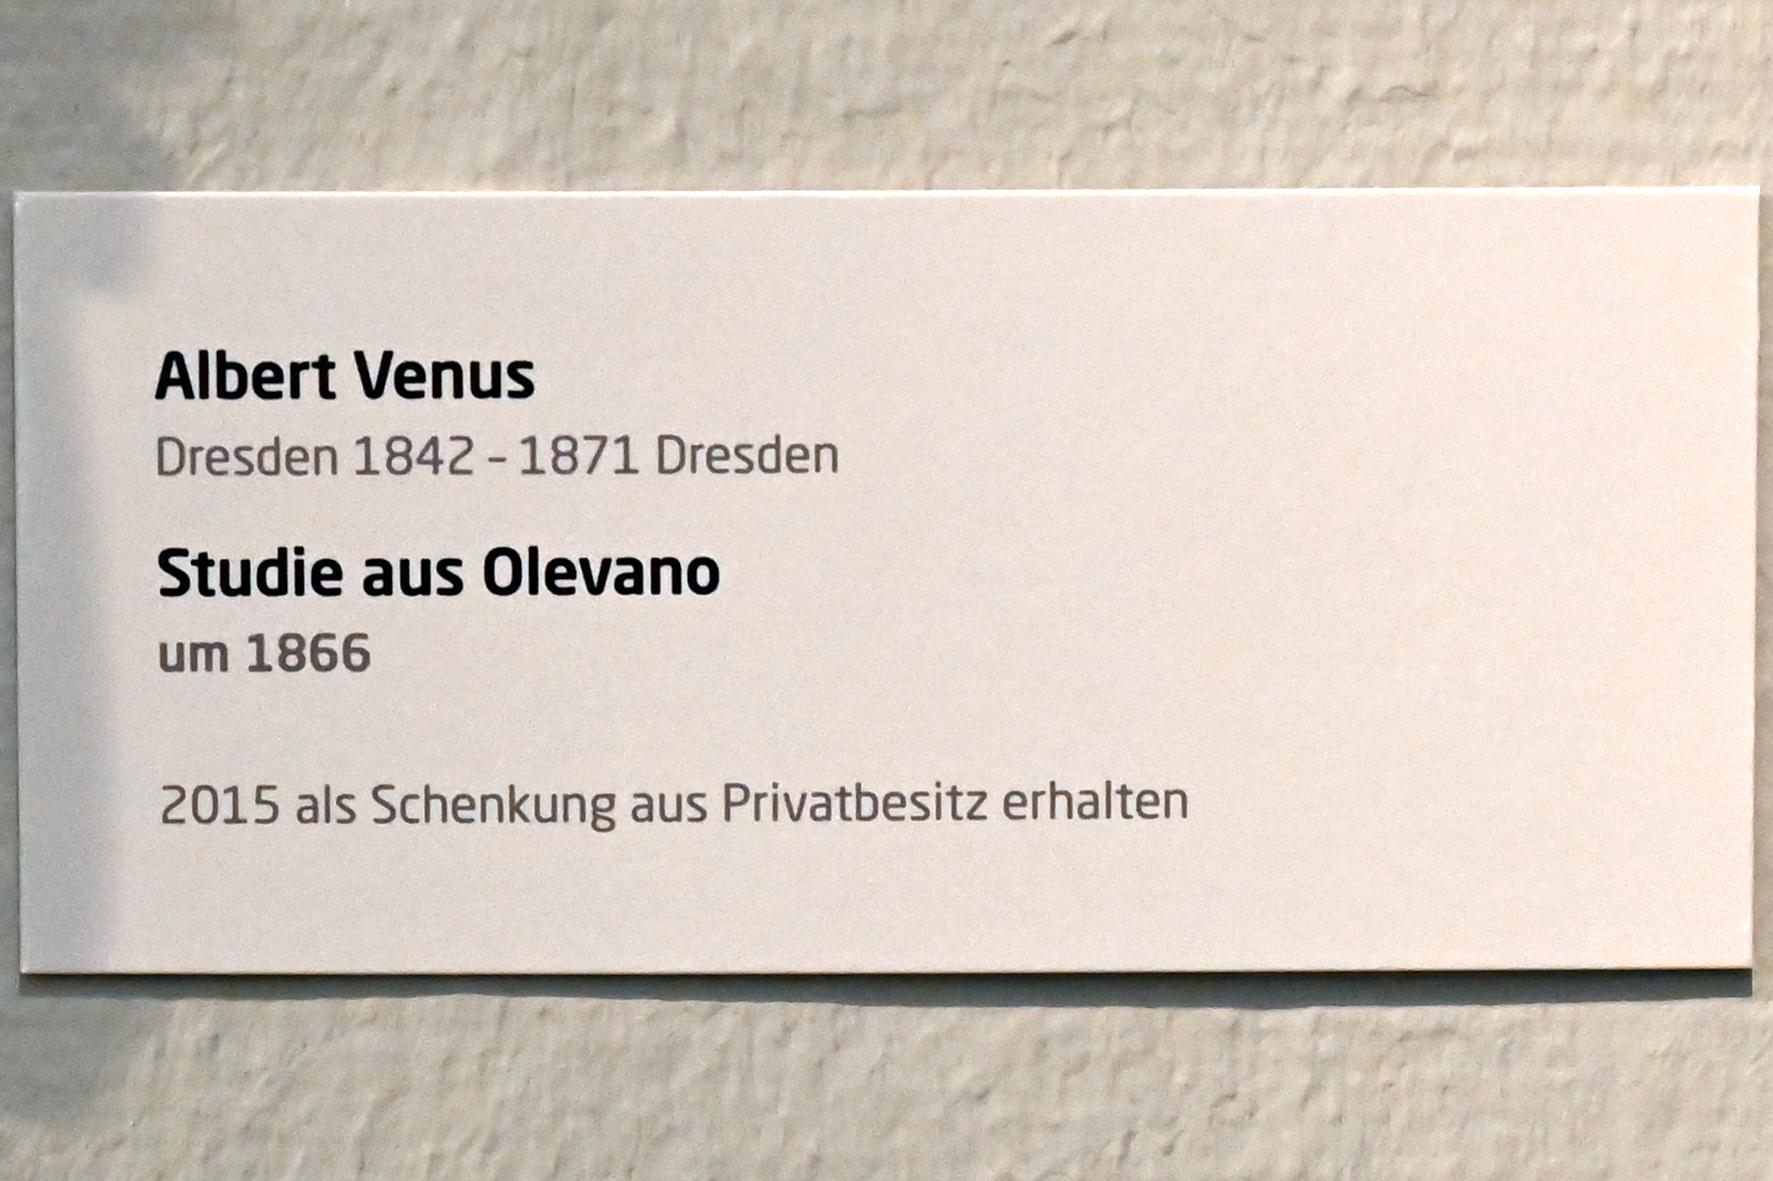 Franz Albert Venus (1866), Studie aus Olevano, Lübeck, Museum Behnhaus Drägerhaus, Obergeschoß Flügel Saal 4, um 1866, Bild 2/2